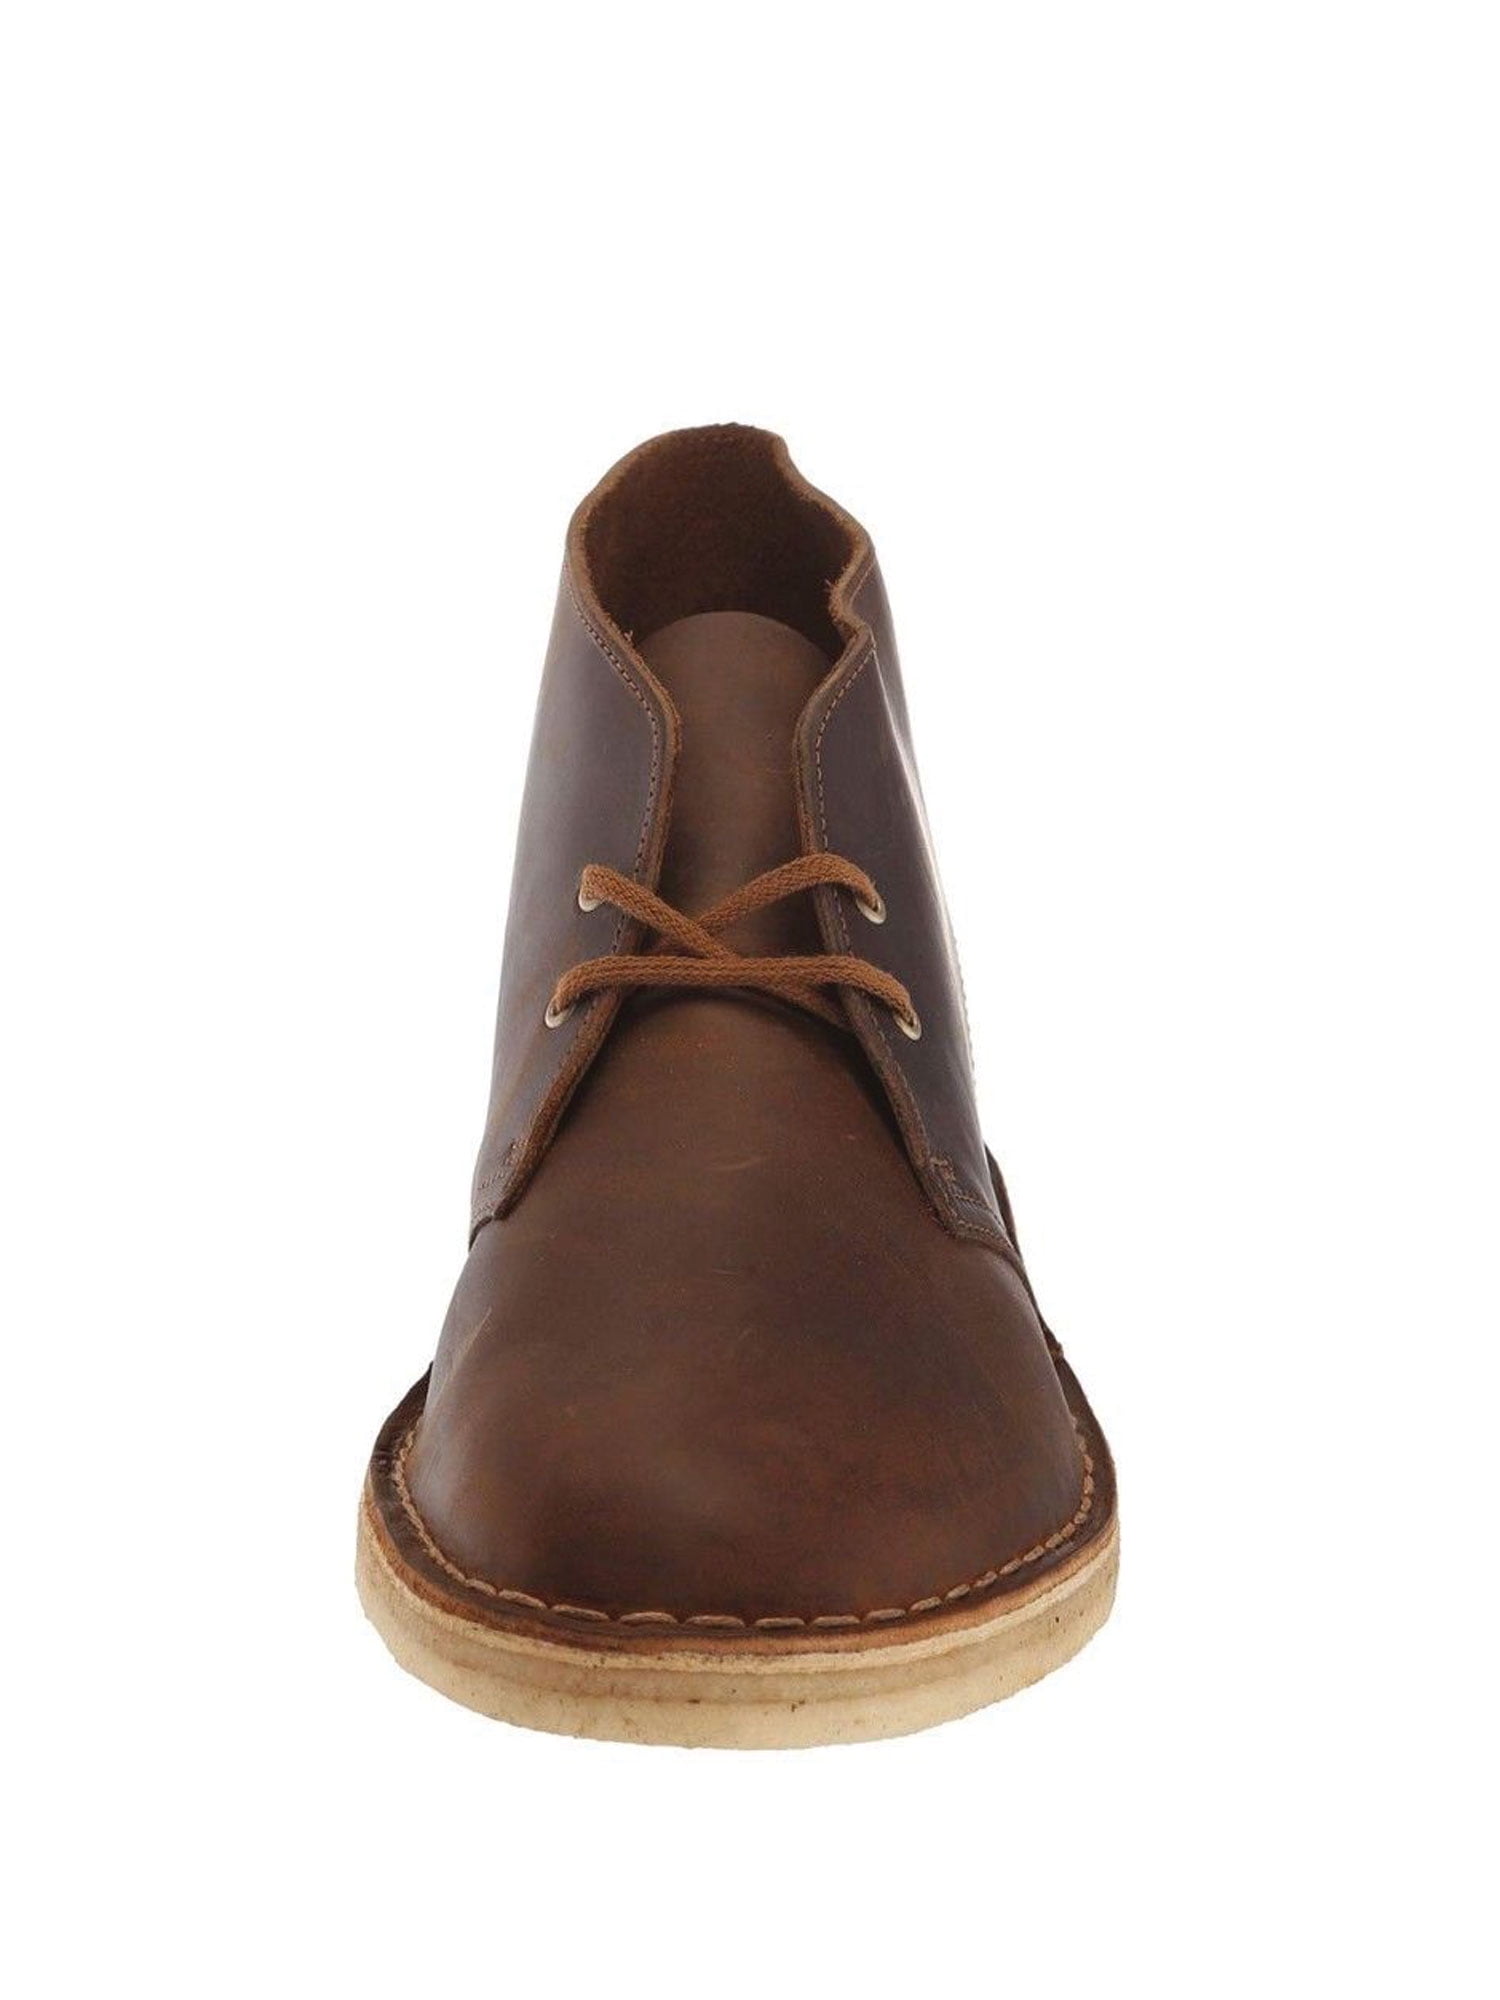 Subproducto Paine Gillic Costa Clarks Desert Boot Men's Originals Leather Chukkas Boot 38221 - Walmart.com